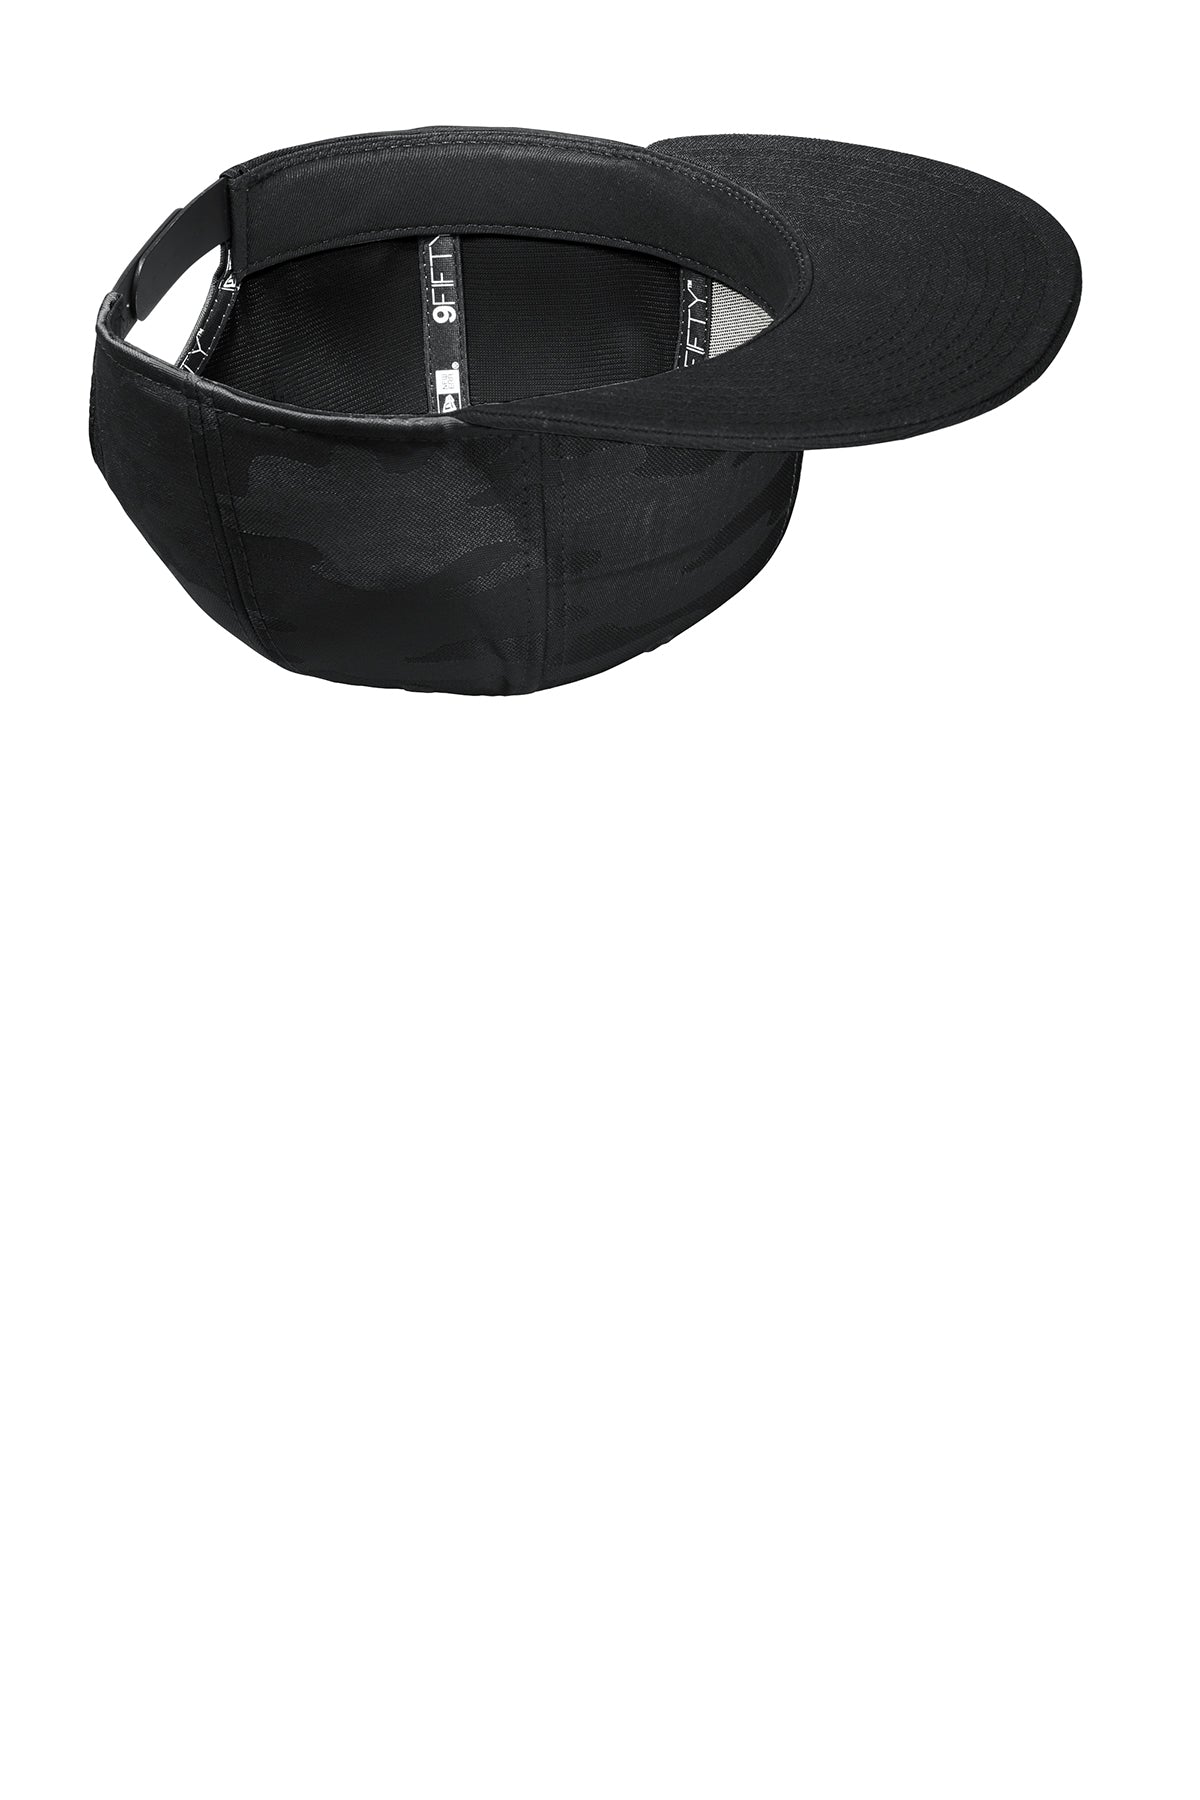 New Era Camo Flat Bill Snapback Custom Caps, Black/ Black Camo